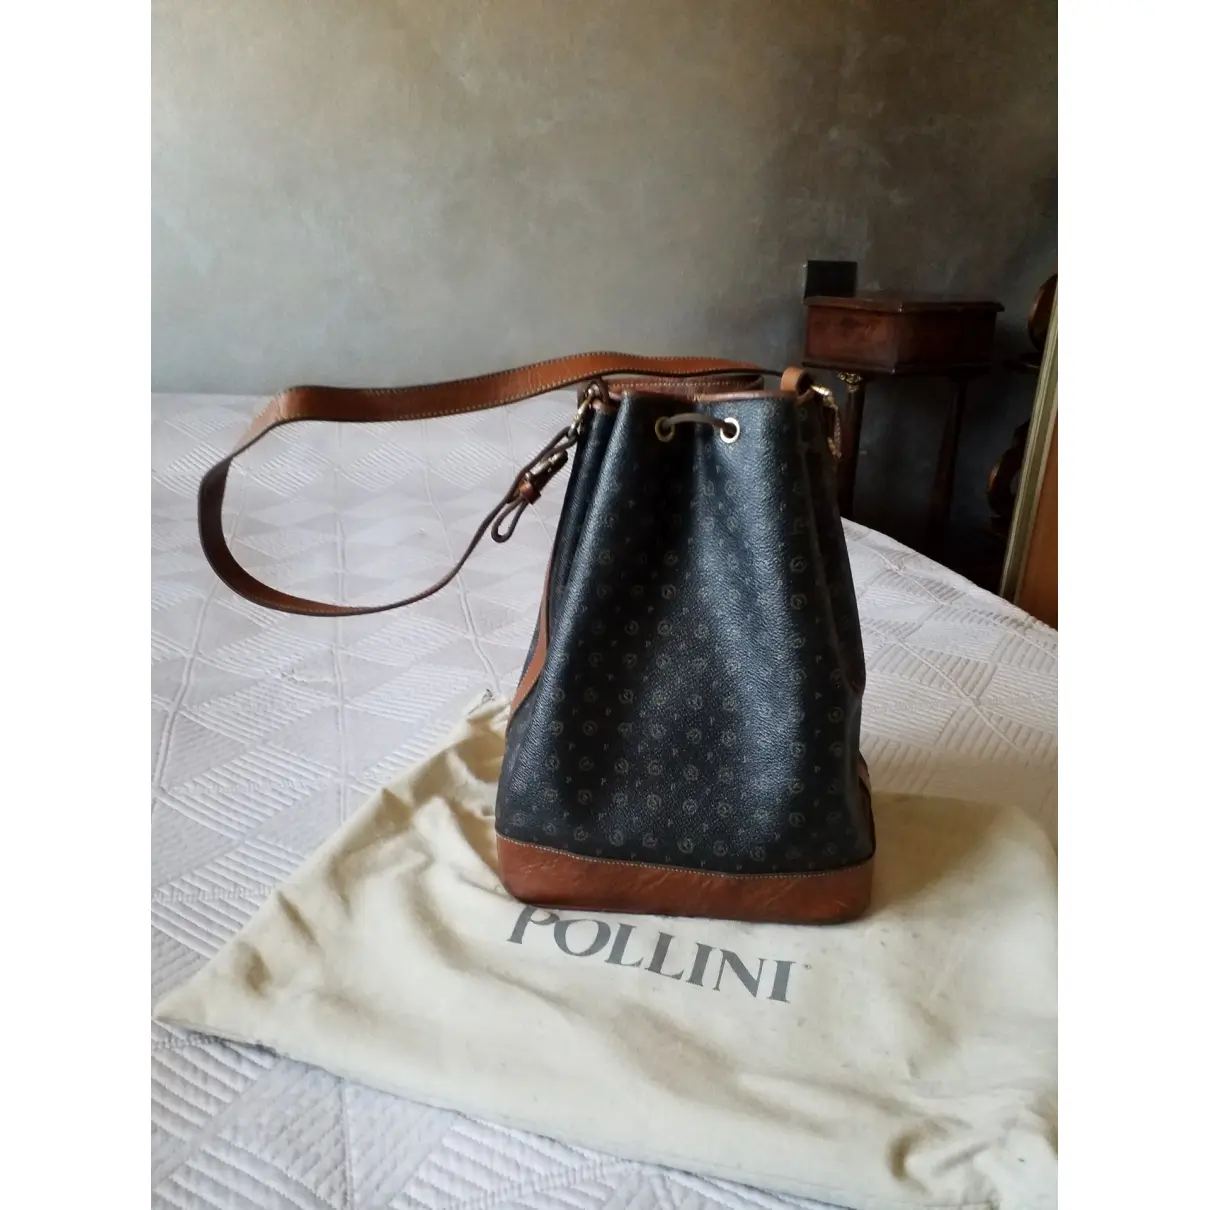 Pollini Cloth crossbody bag for sale - Vintage